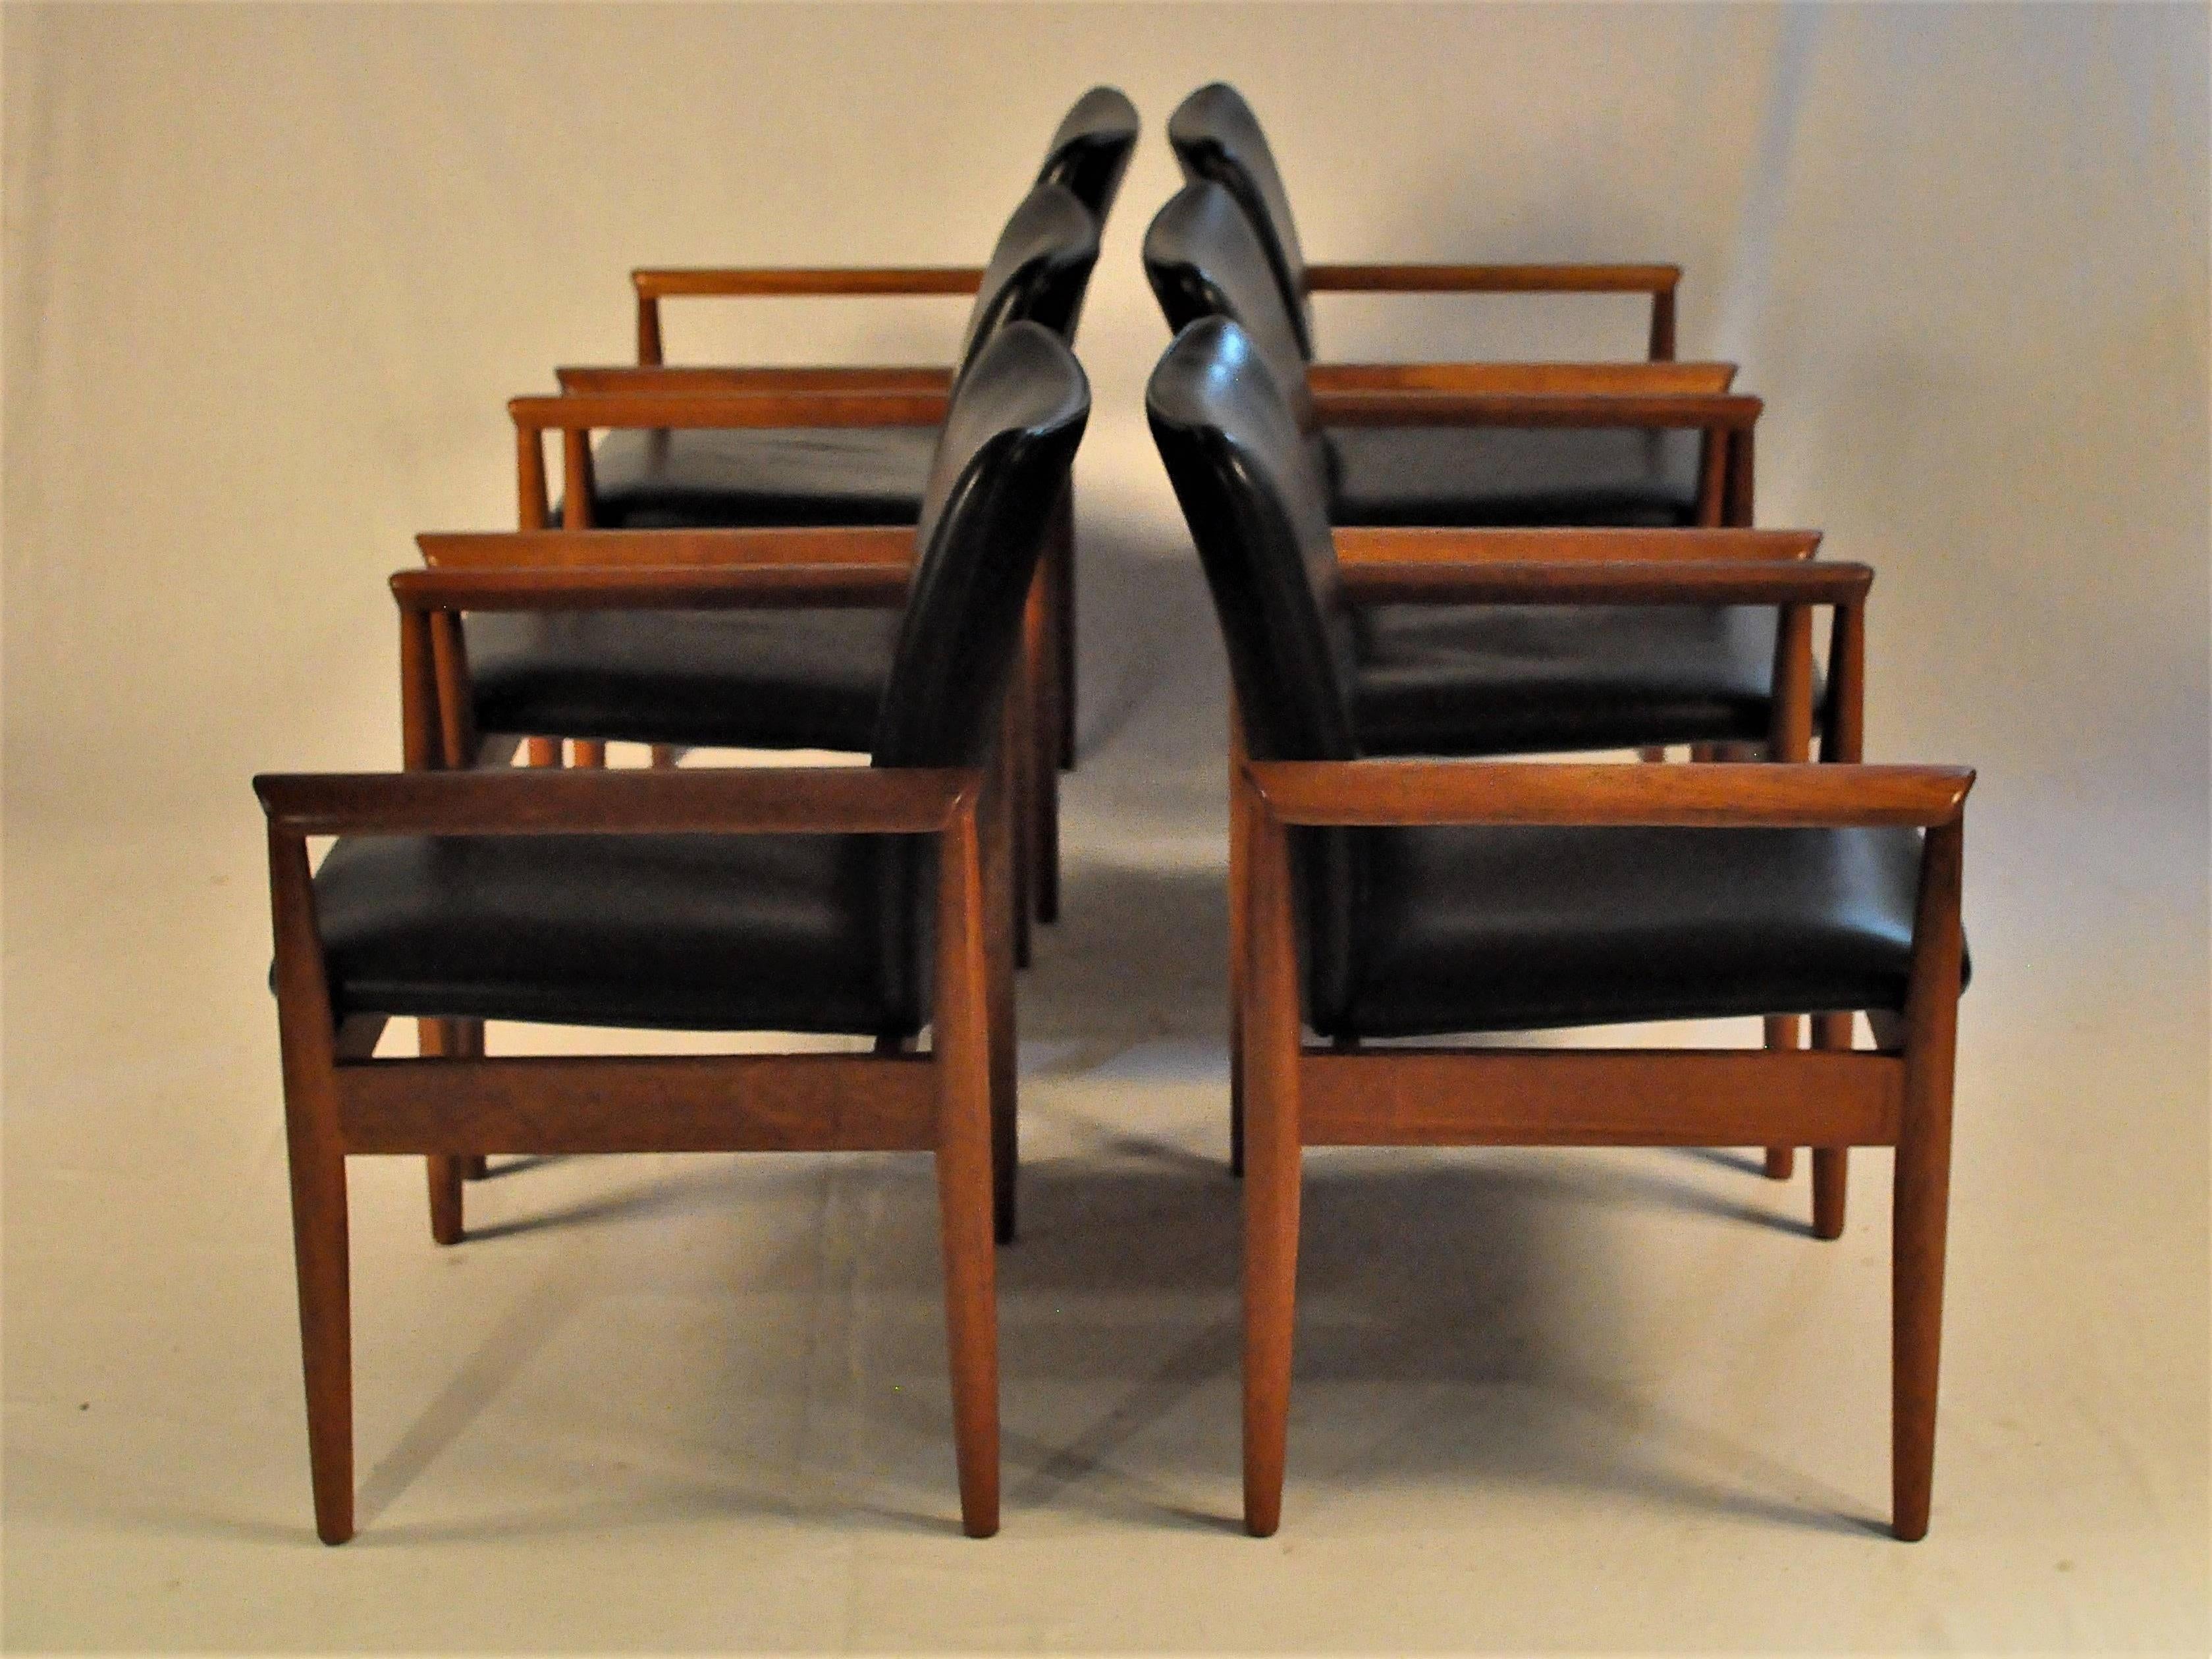 Scandinavian Modern 1960s Finn Juhl Model 209 Diplomat Chair in Teak and Black Leather by Cado